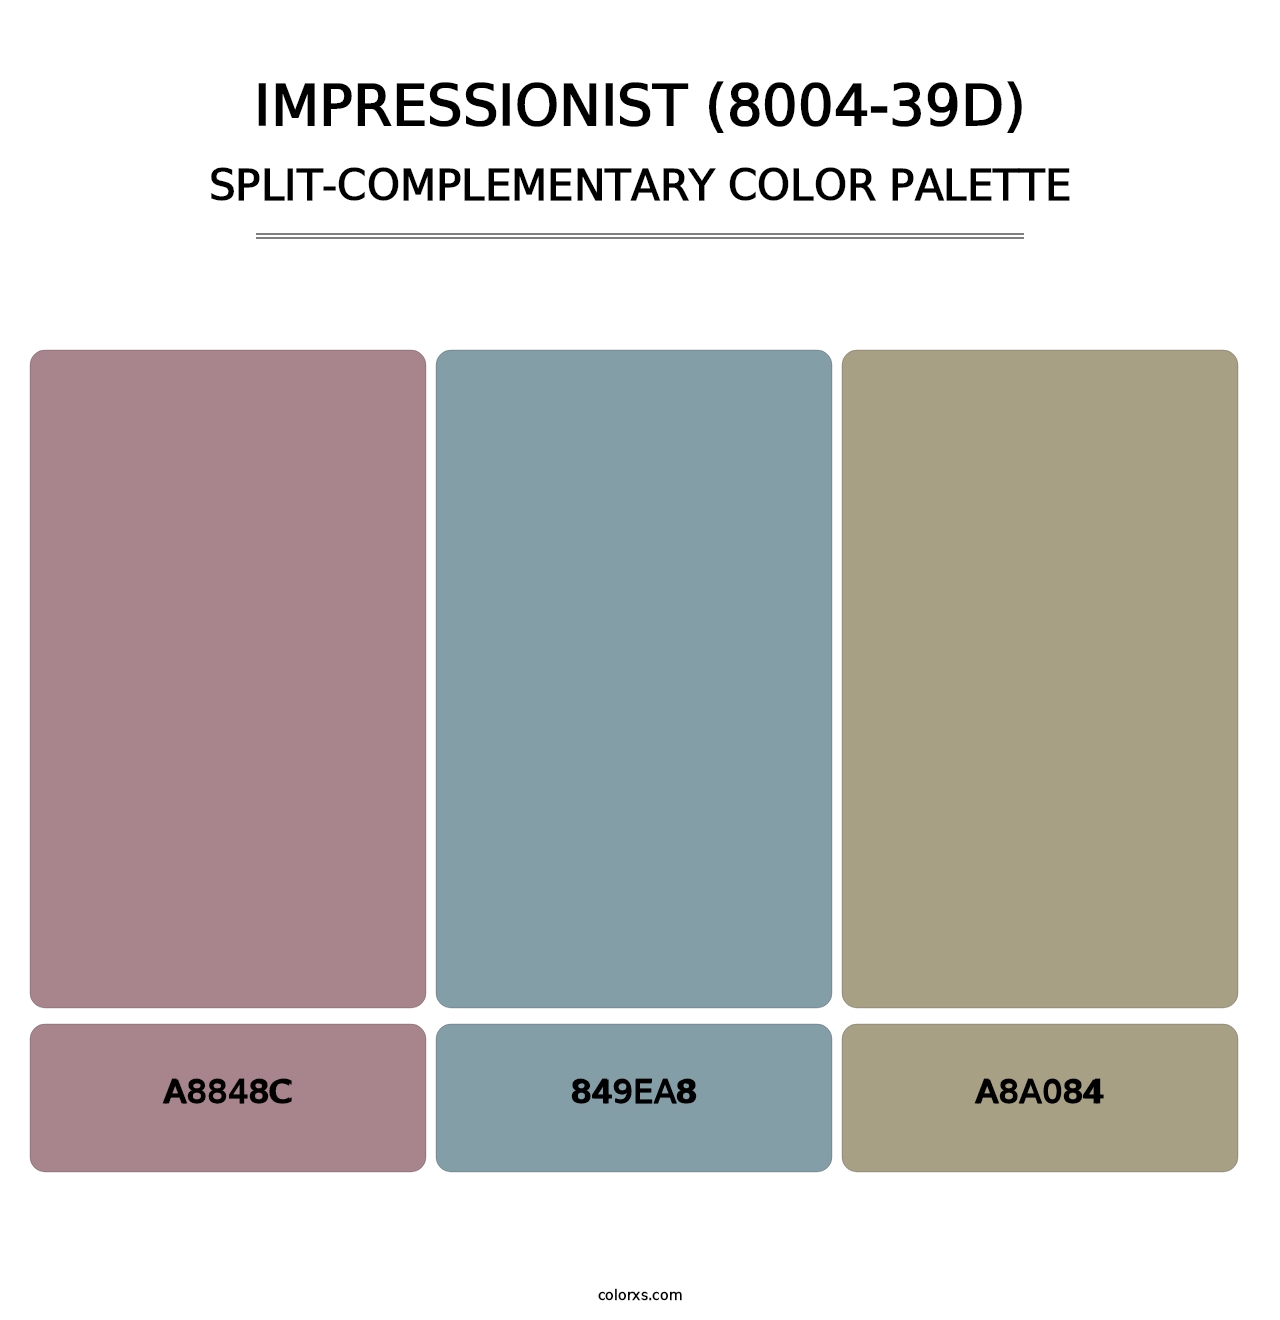 Impressionist (8004-39D) - Split-Complementary Color Palette